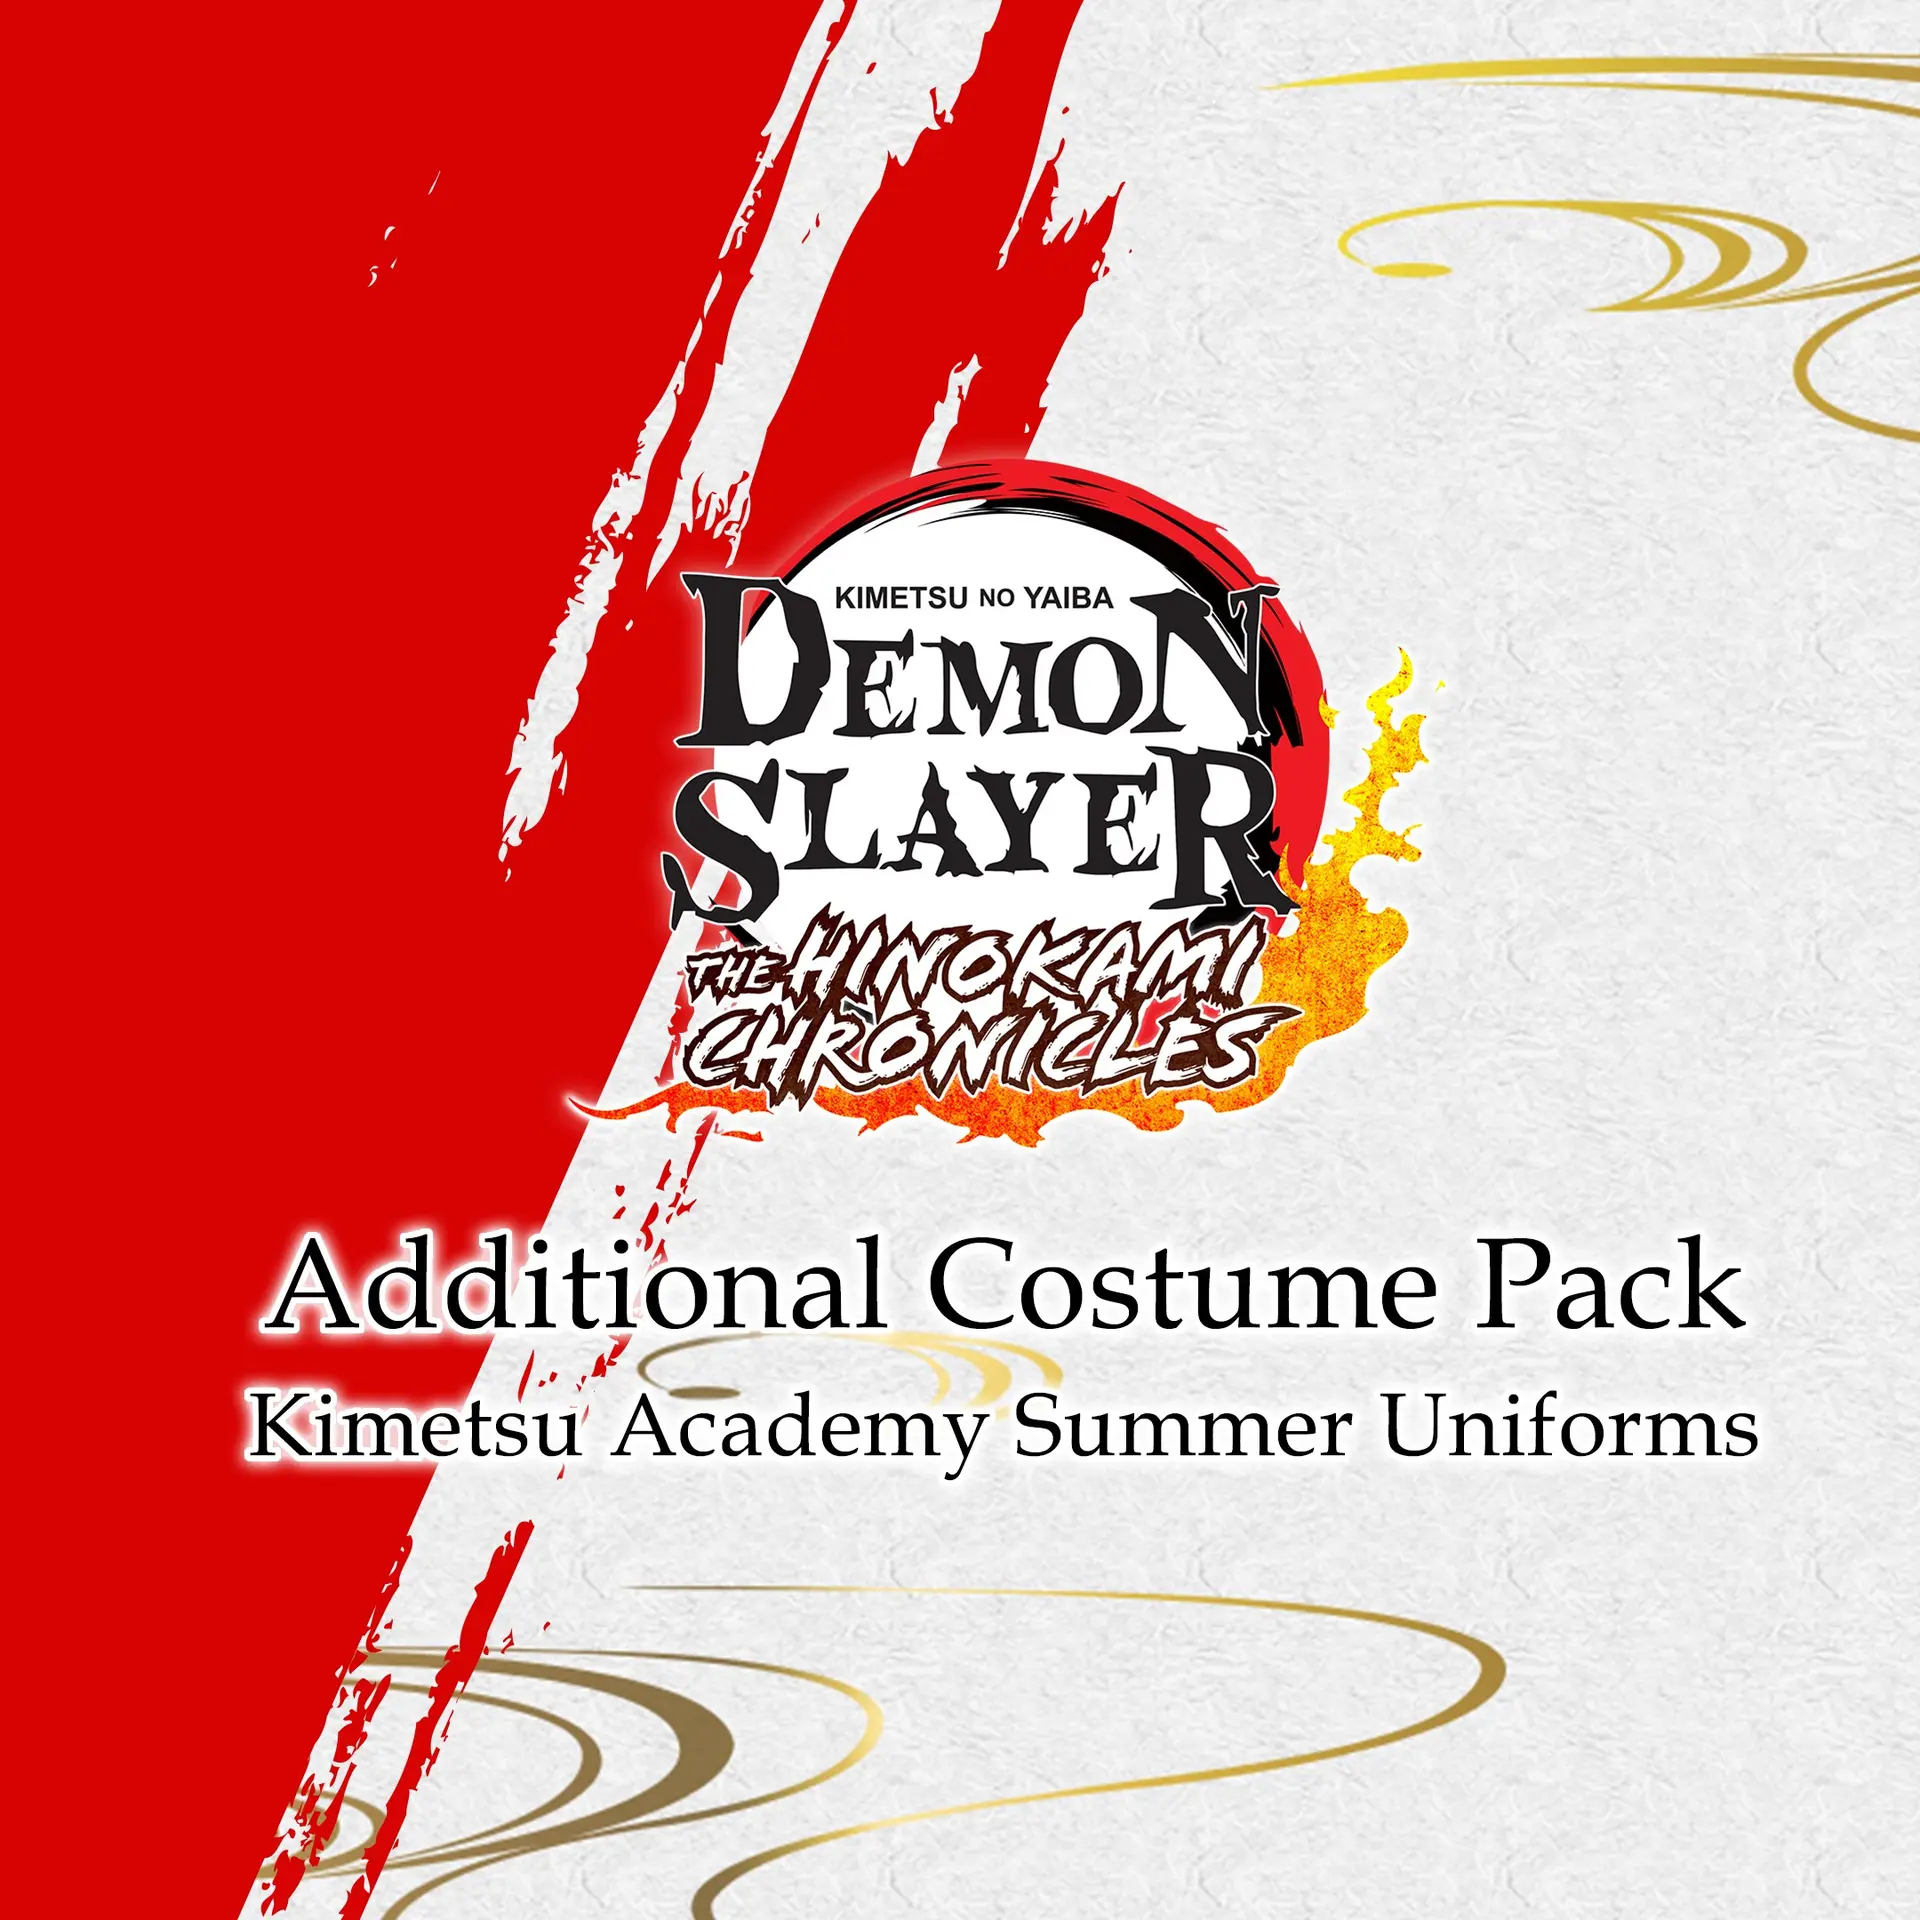 Additional Costume Pack - Kimetsu Academy Summer Uniforms (Xbox Games BR)